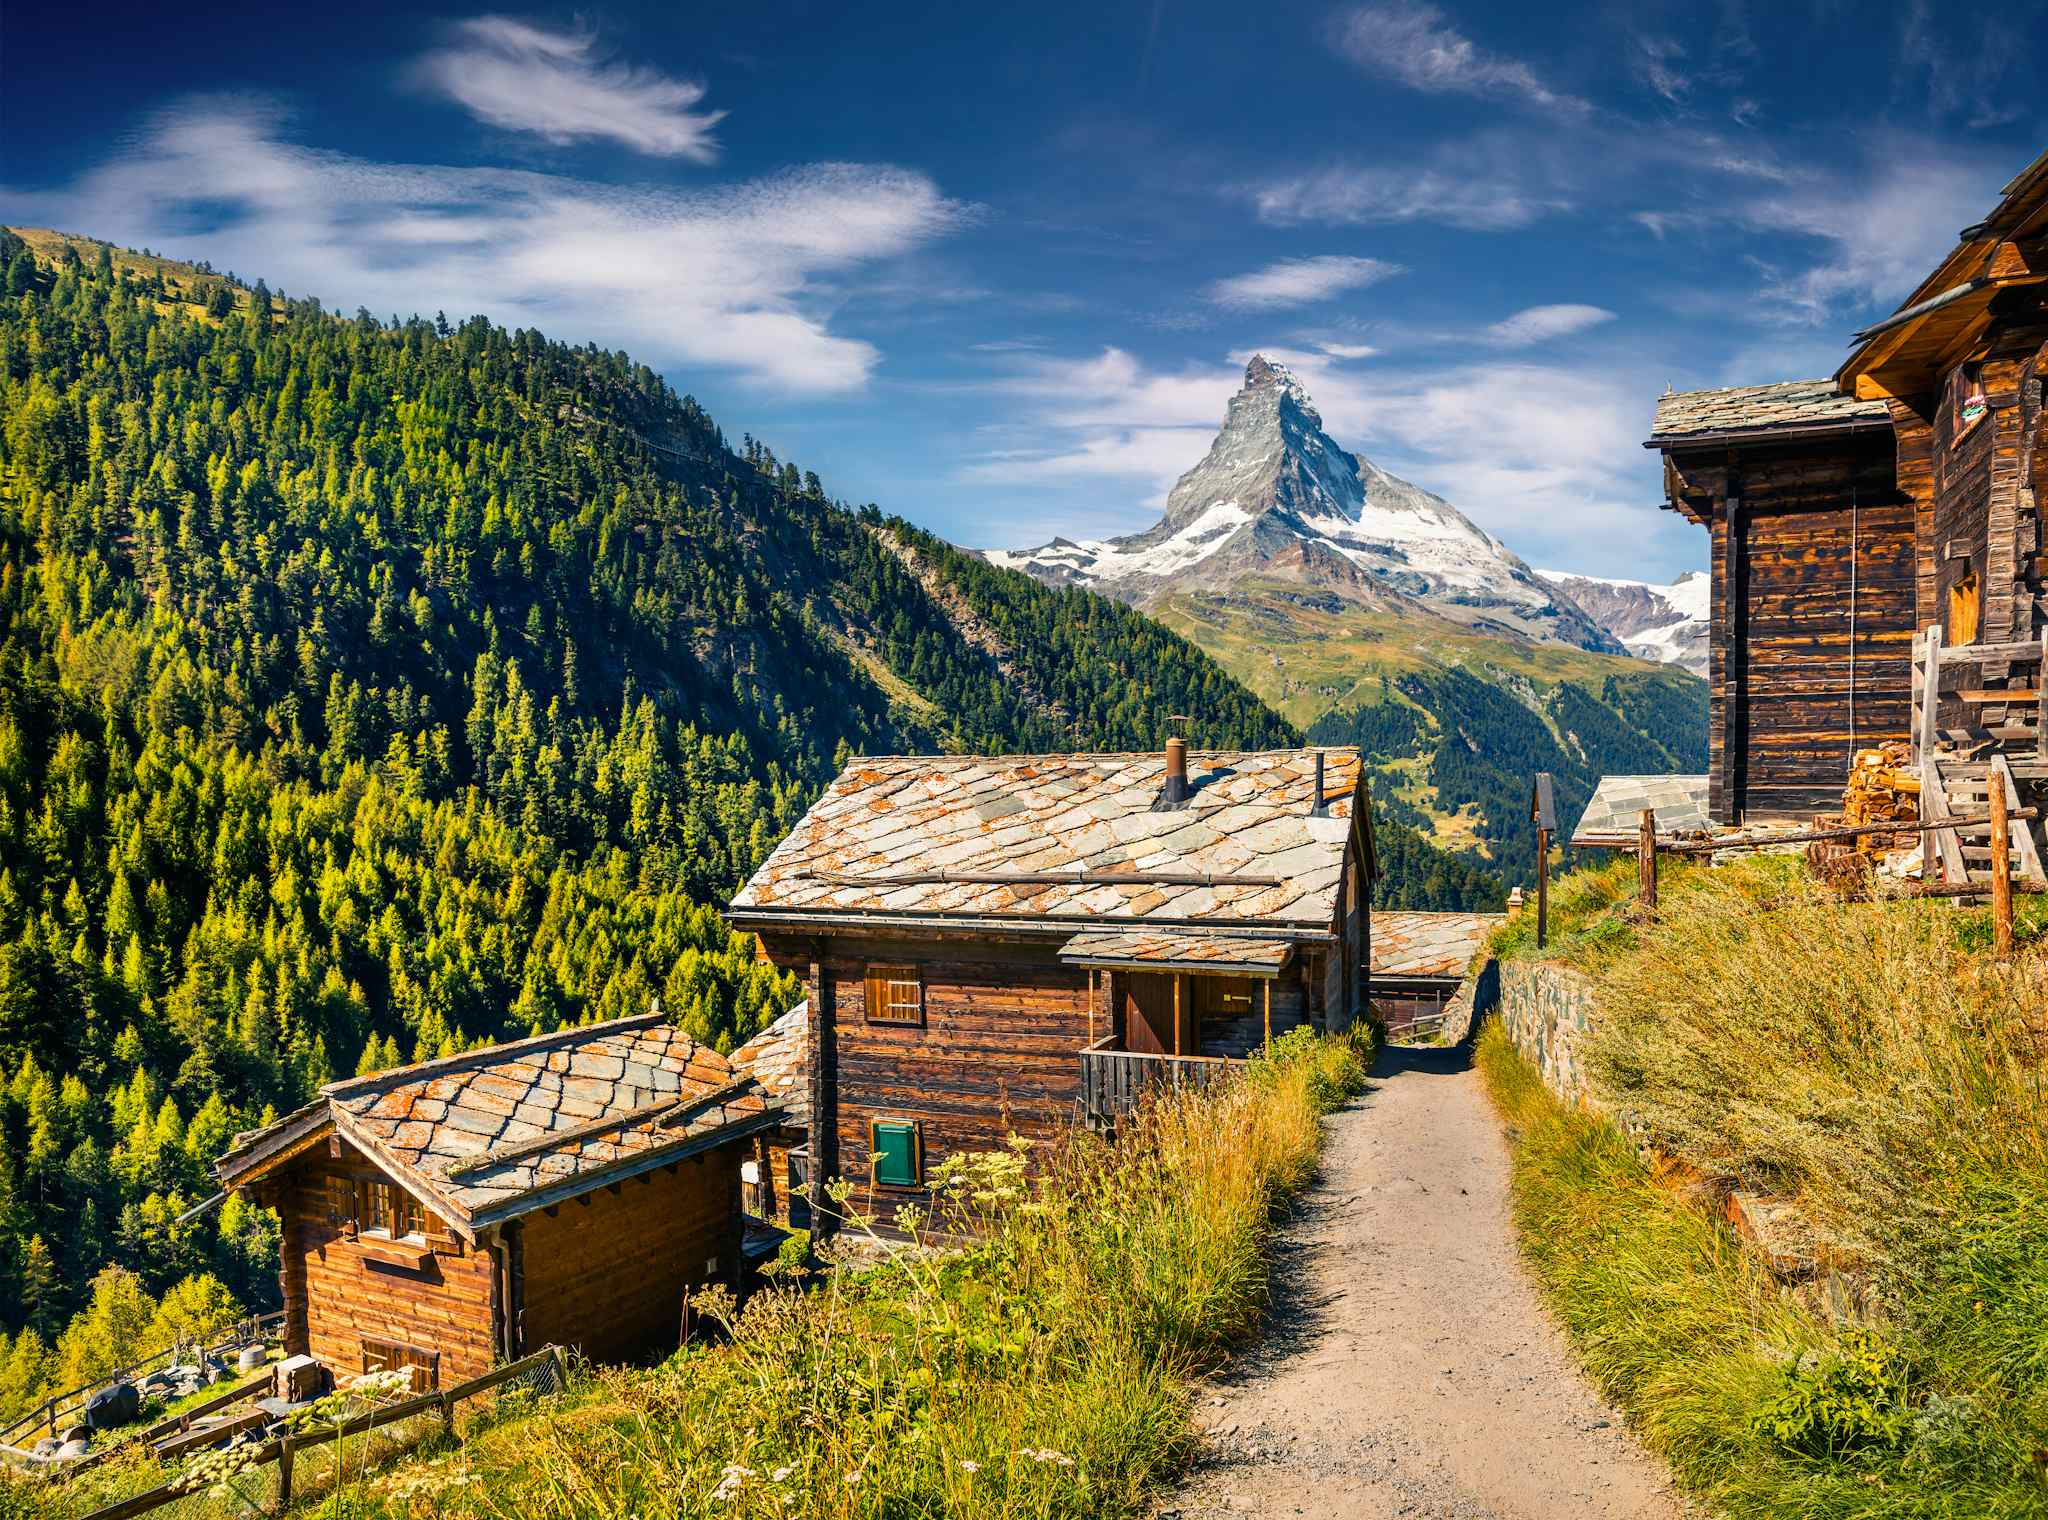 Switzerland Hiking Tours  Best Active Trips to Switzerland